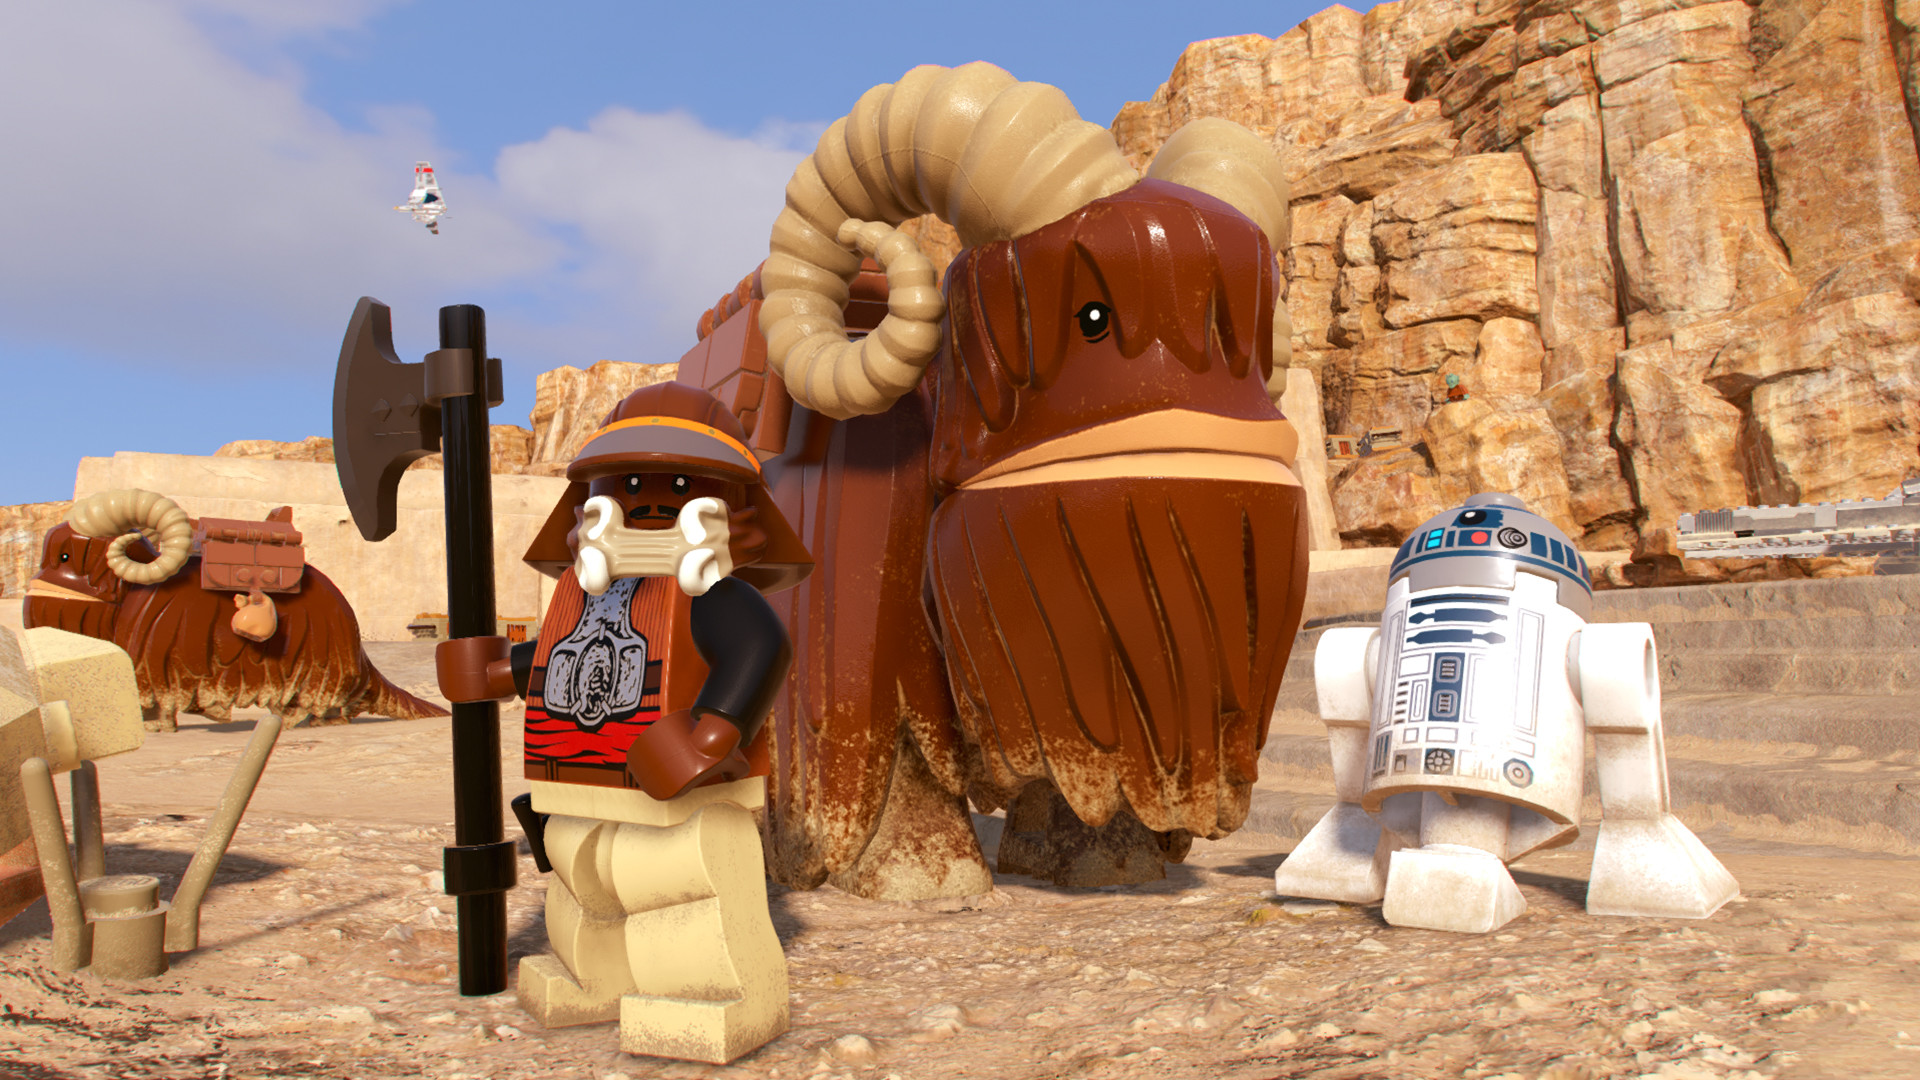 LEGO Star Wars: The Skywalker Saga PlayStation 5 Account